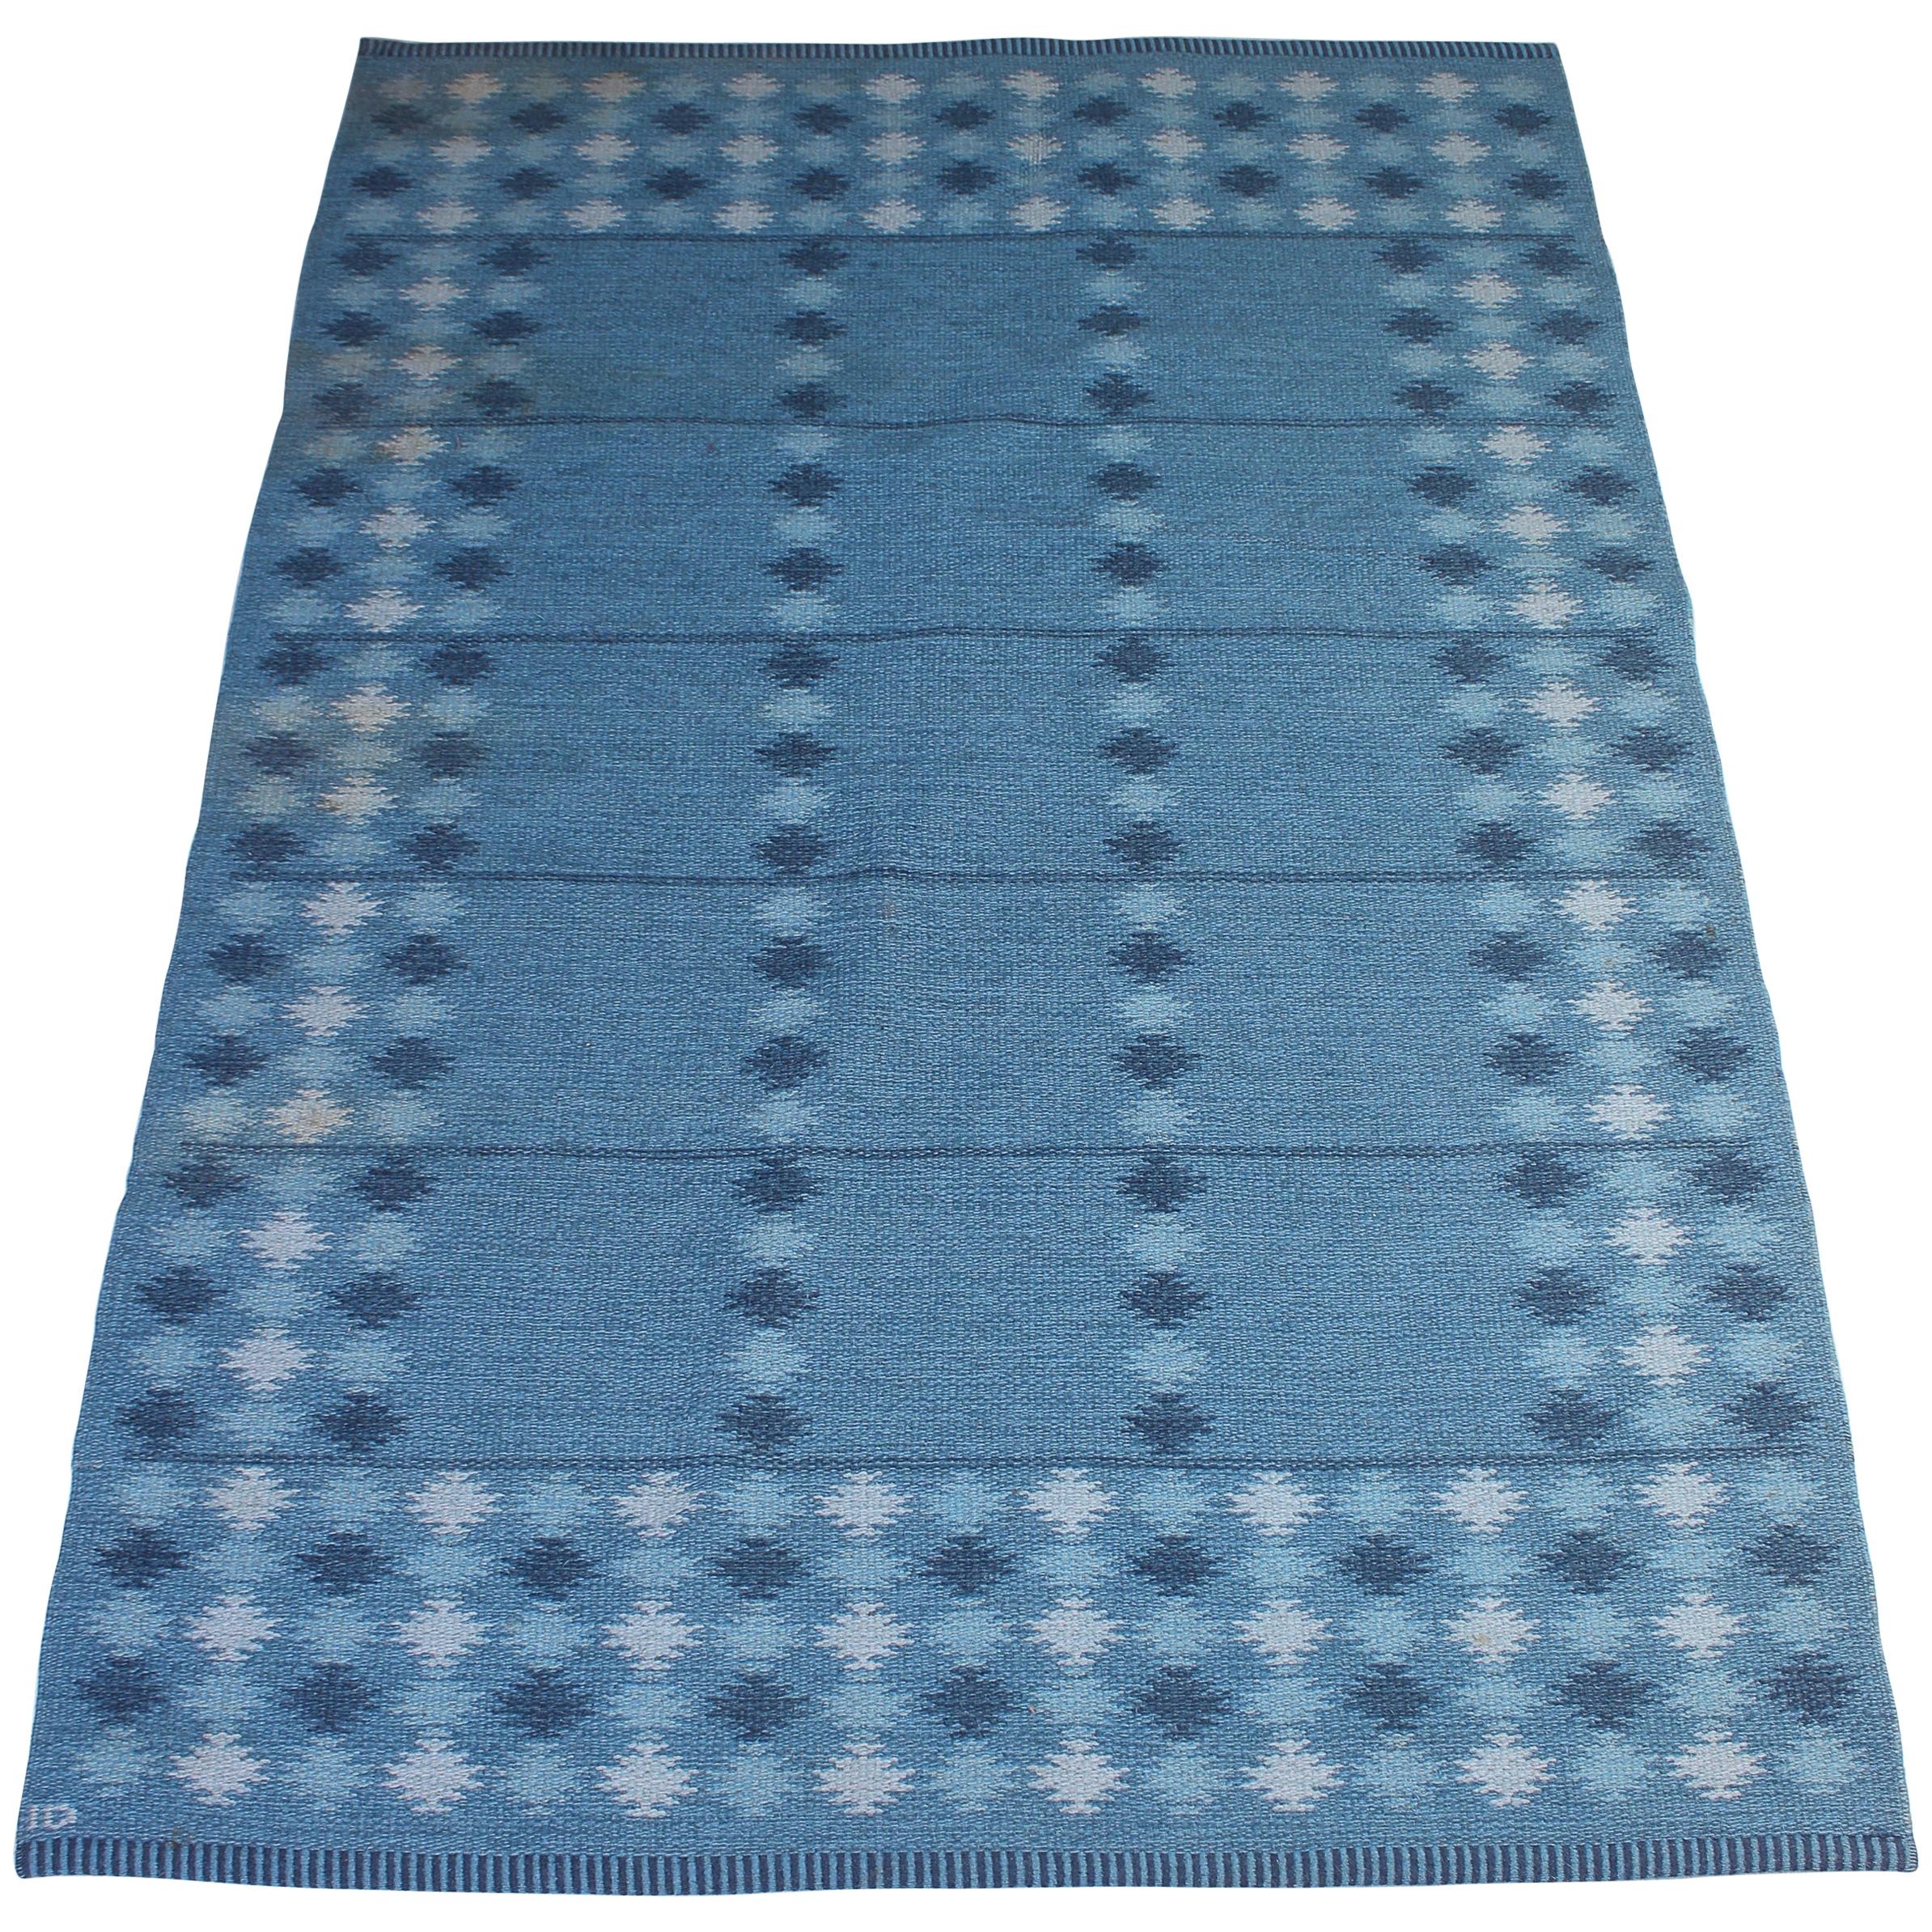 Midcentury Swedish Flat-Weave Carpet by Ingrid Dessau, 1950s